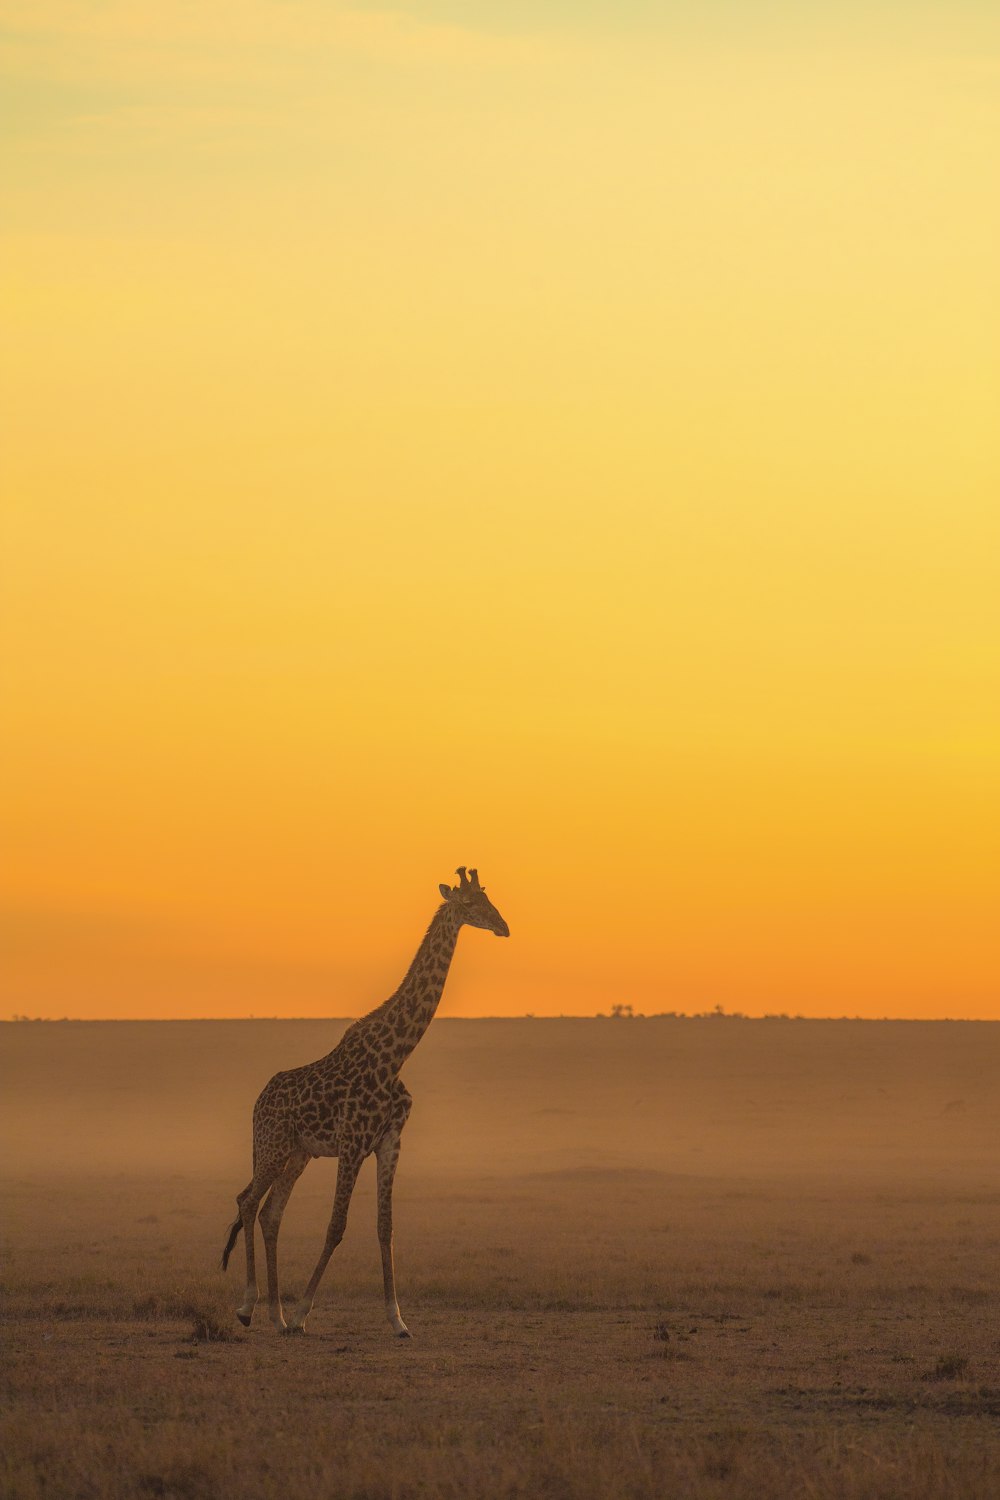 giraffe standing on brown sand during sunset